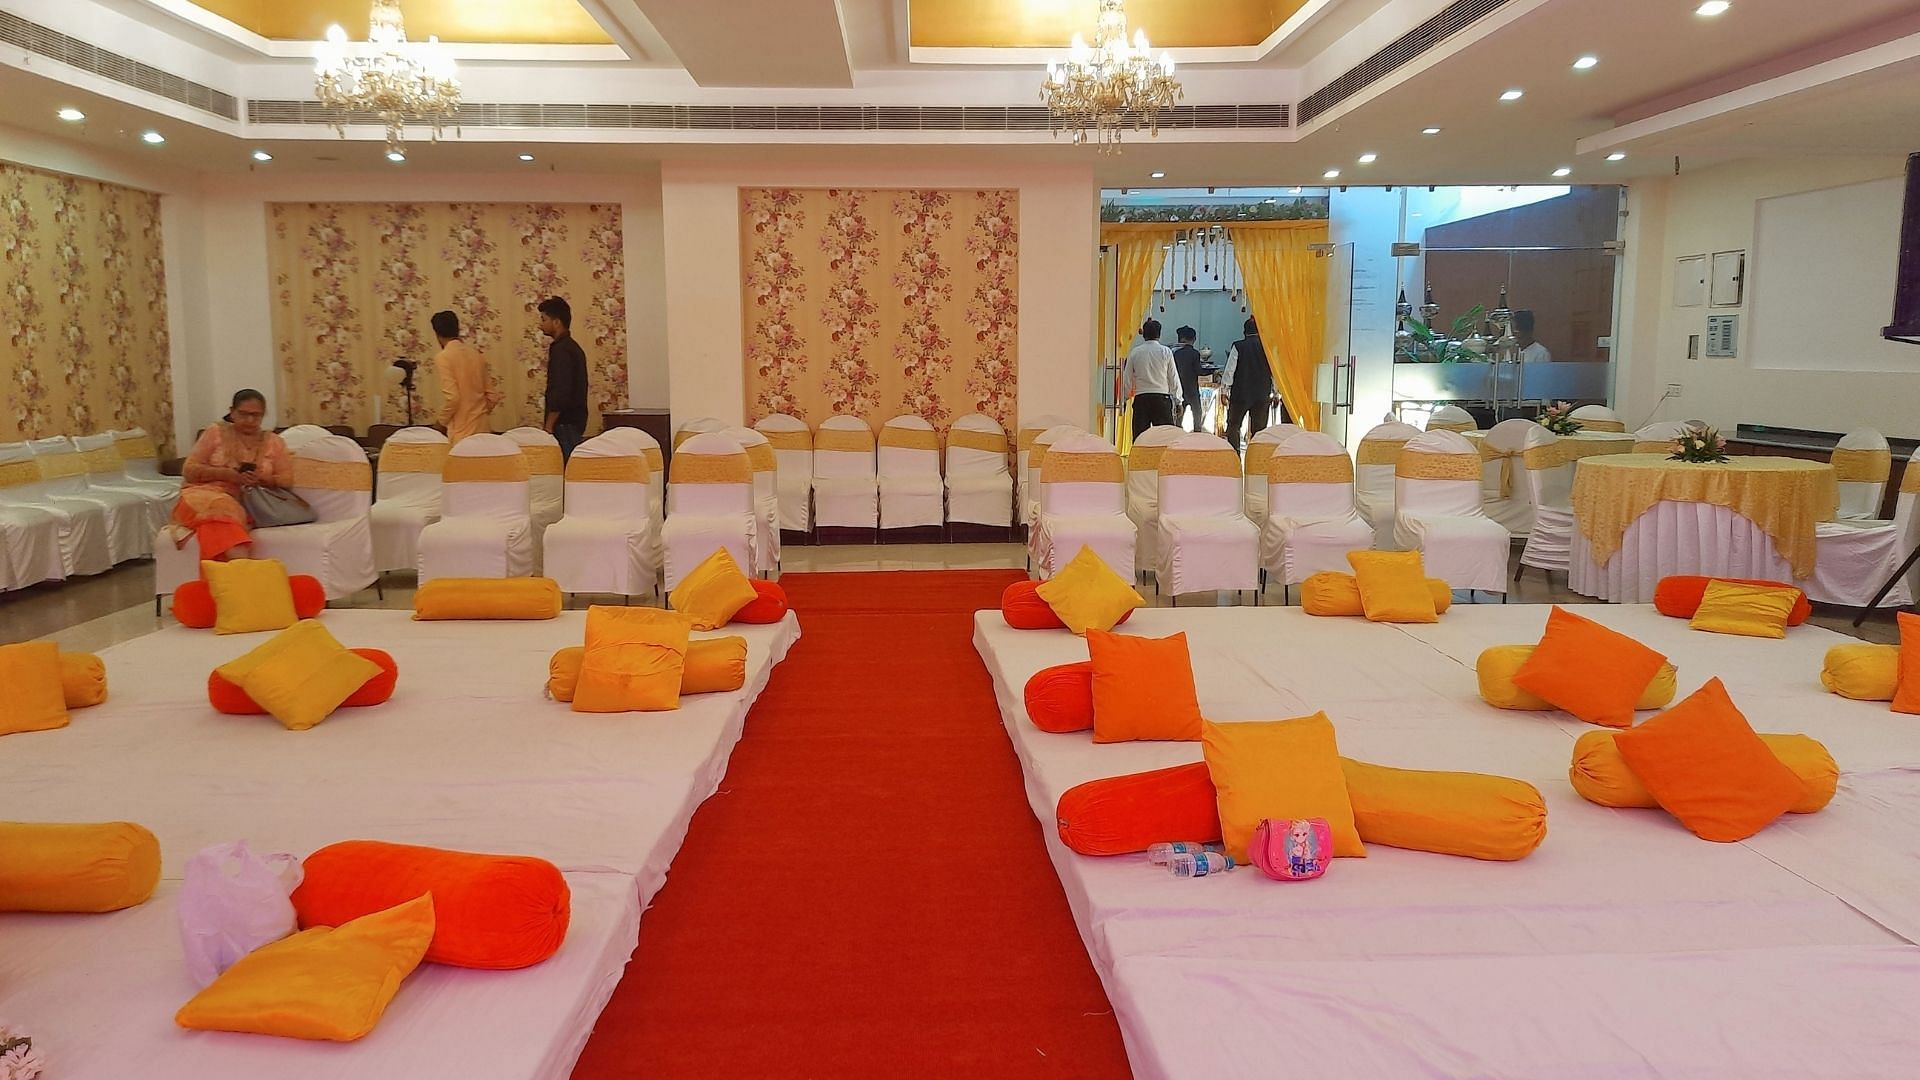 Madhuban Hotel in Greater Kailash 1, Delhi